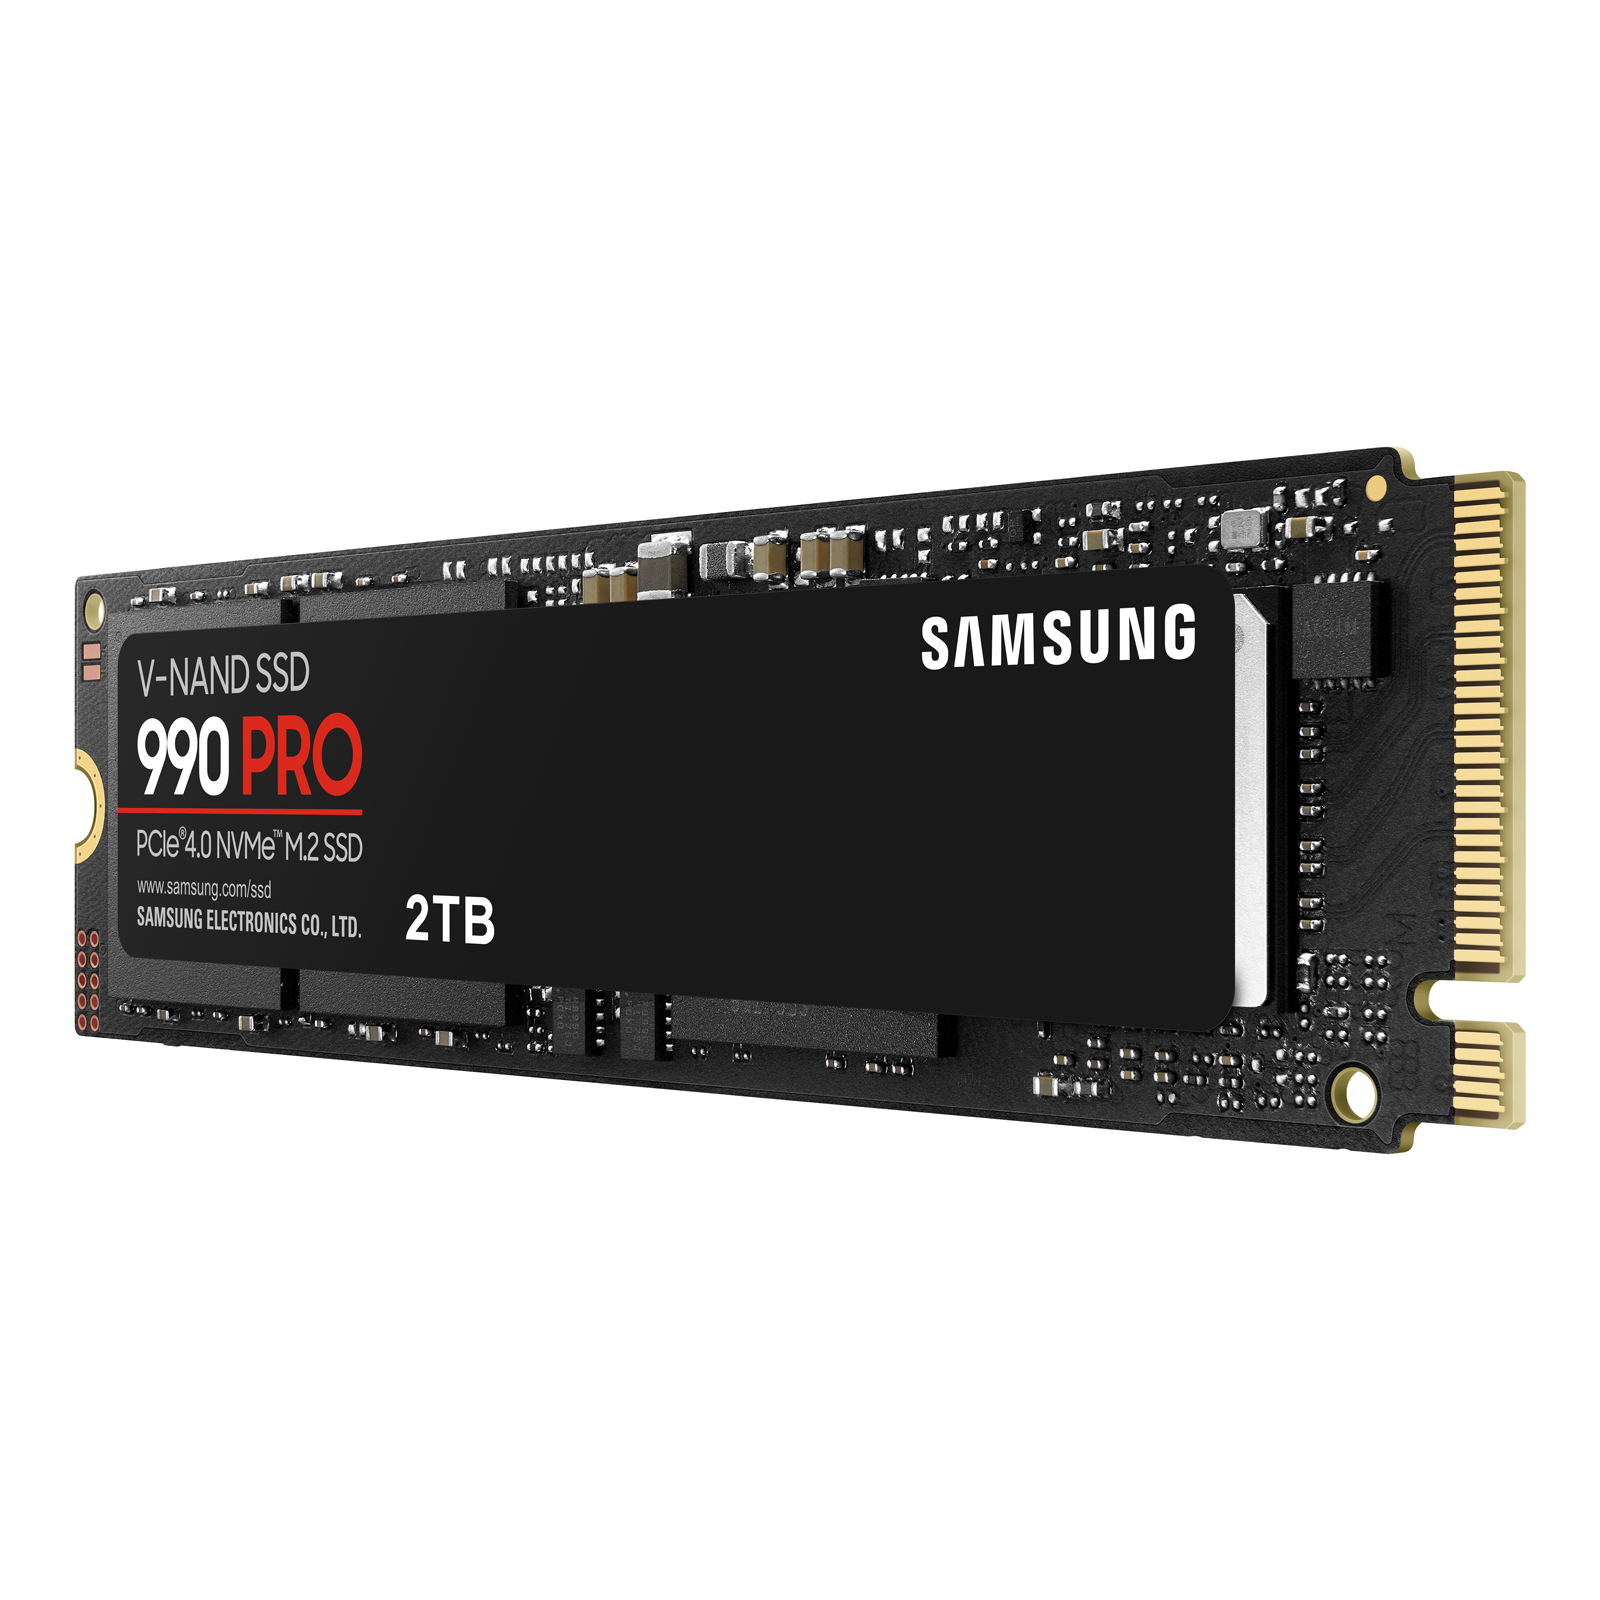 Samsung NVMe M.2 SSD 990 PRO (2TB) | ITGマーケティング - Samsung ...